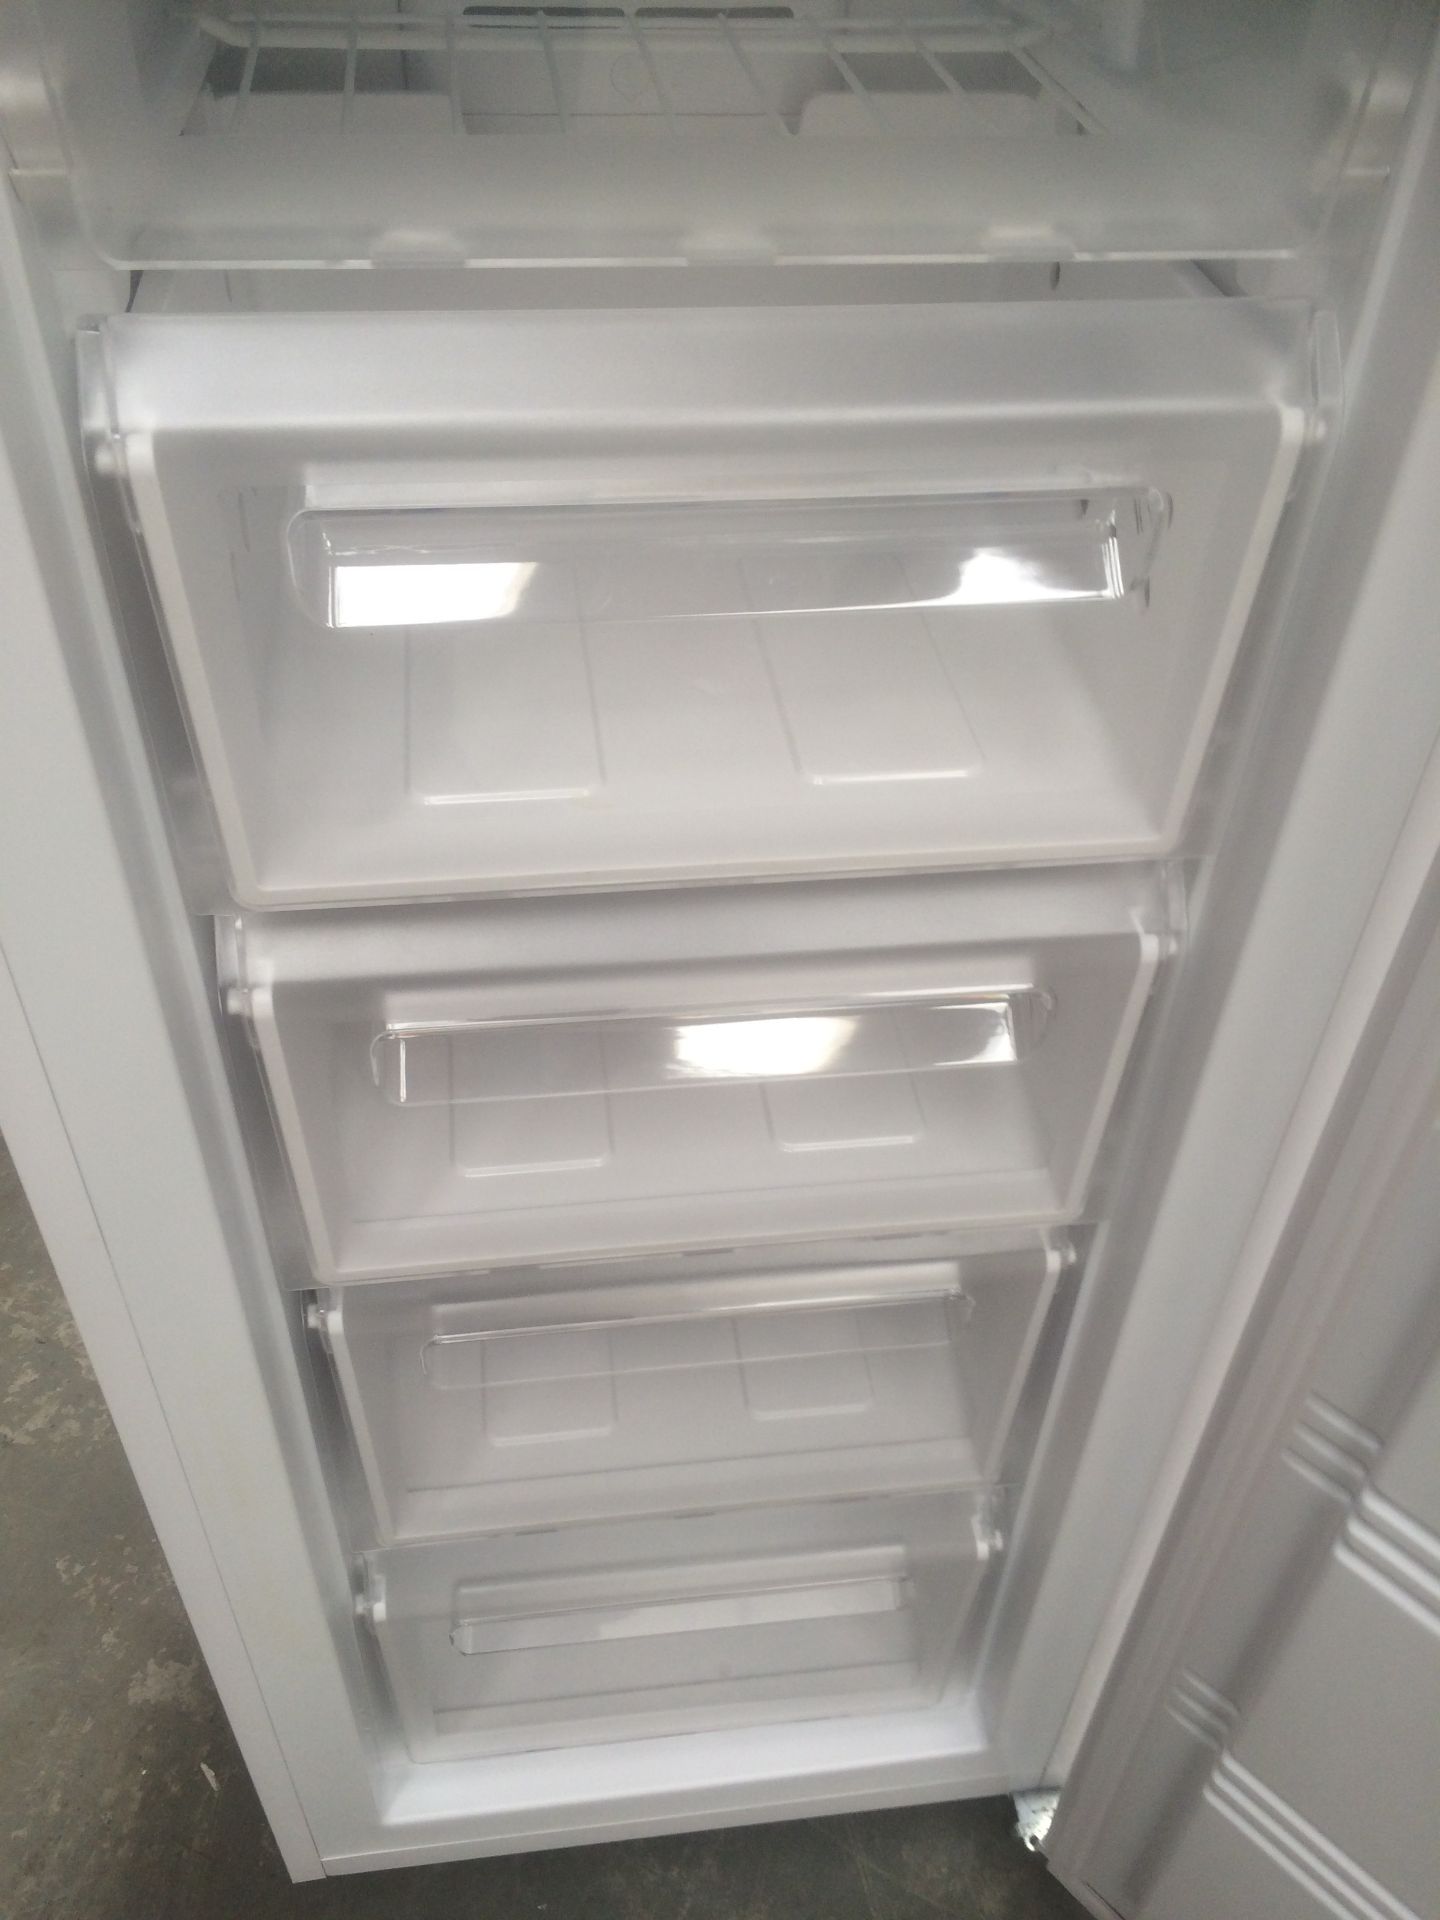 Fridgemaster freezer working 5 compartments 550mmX550mmX1440mm high - Image 3 of 3